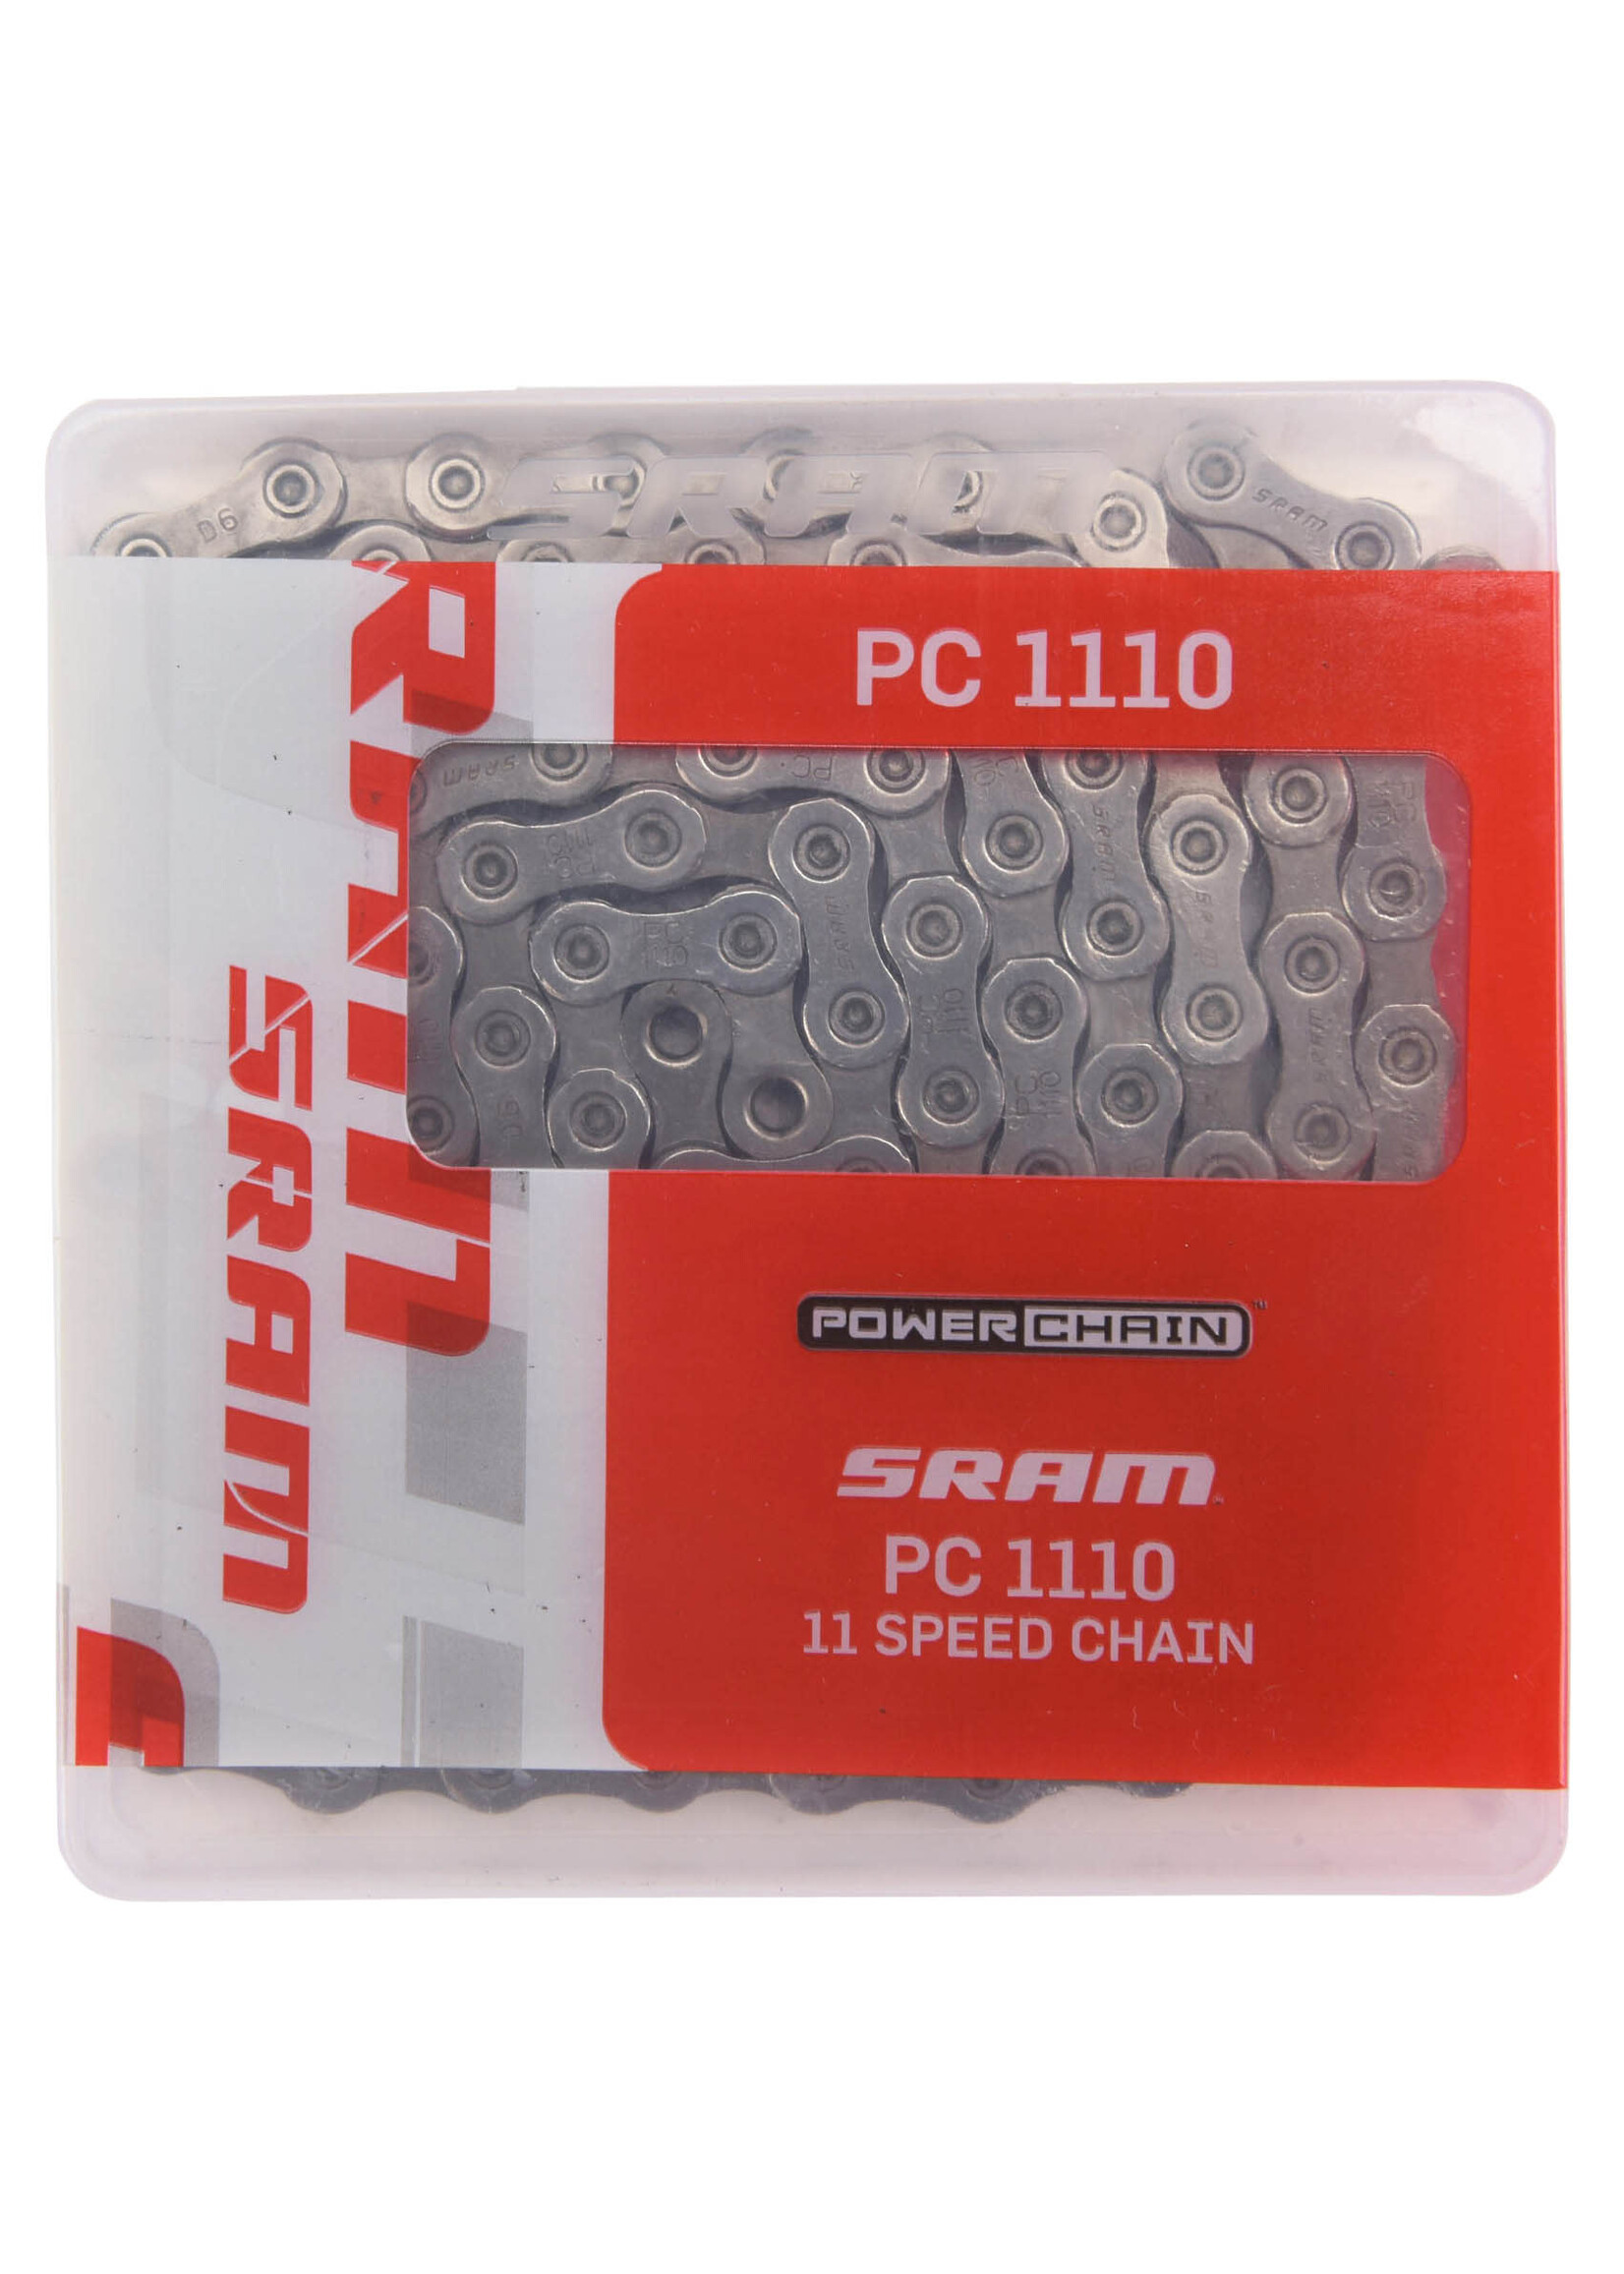 SRAM Chain PC 1110 SolidPin 114 links with PowerLock 11 speed